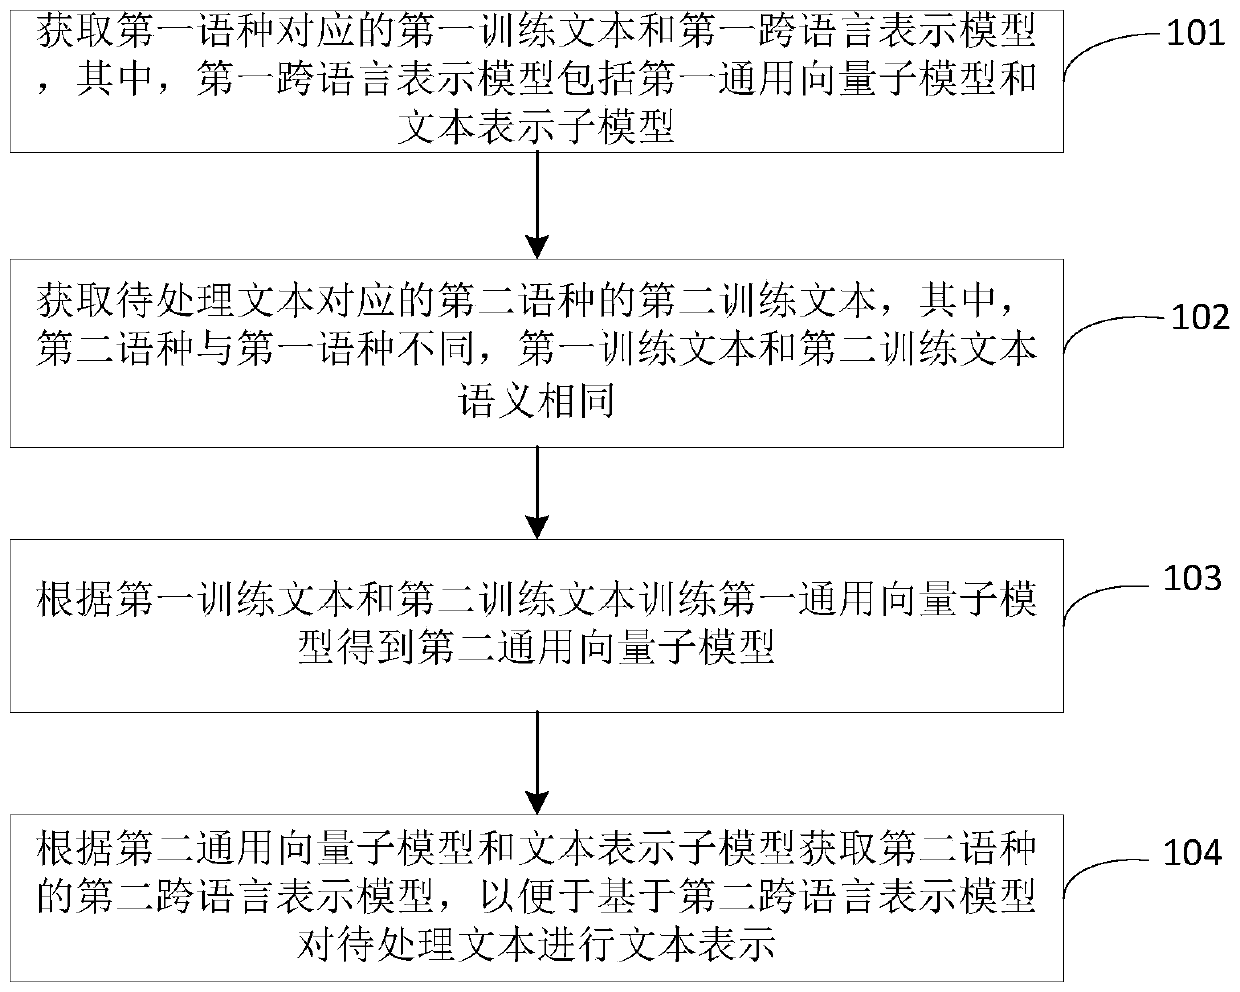 Cross-language text representation method and device